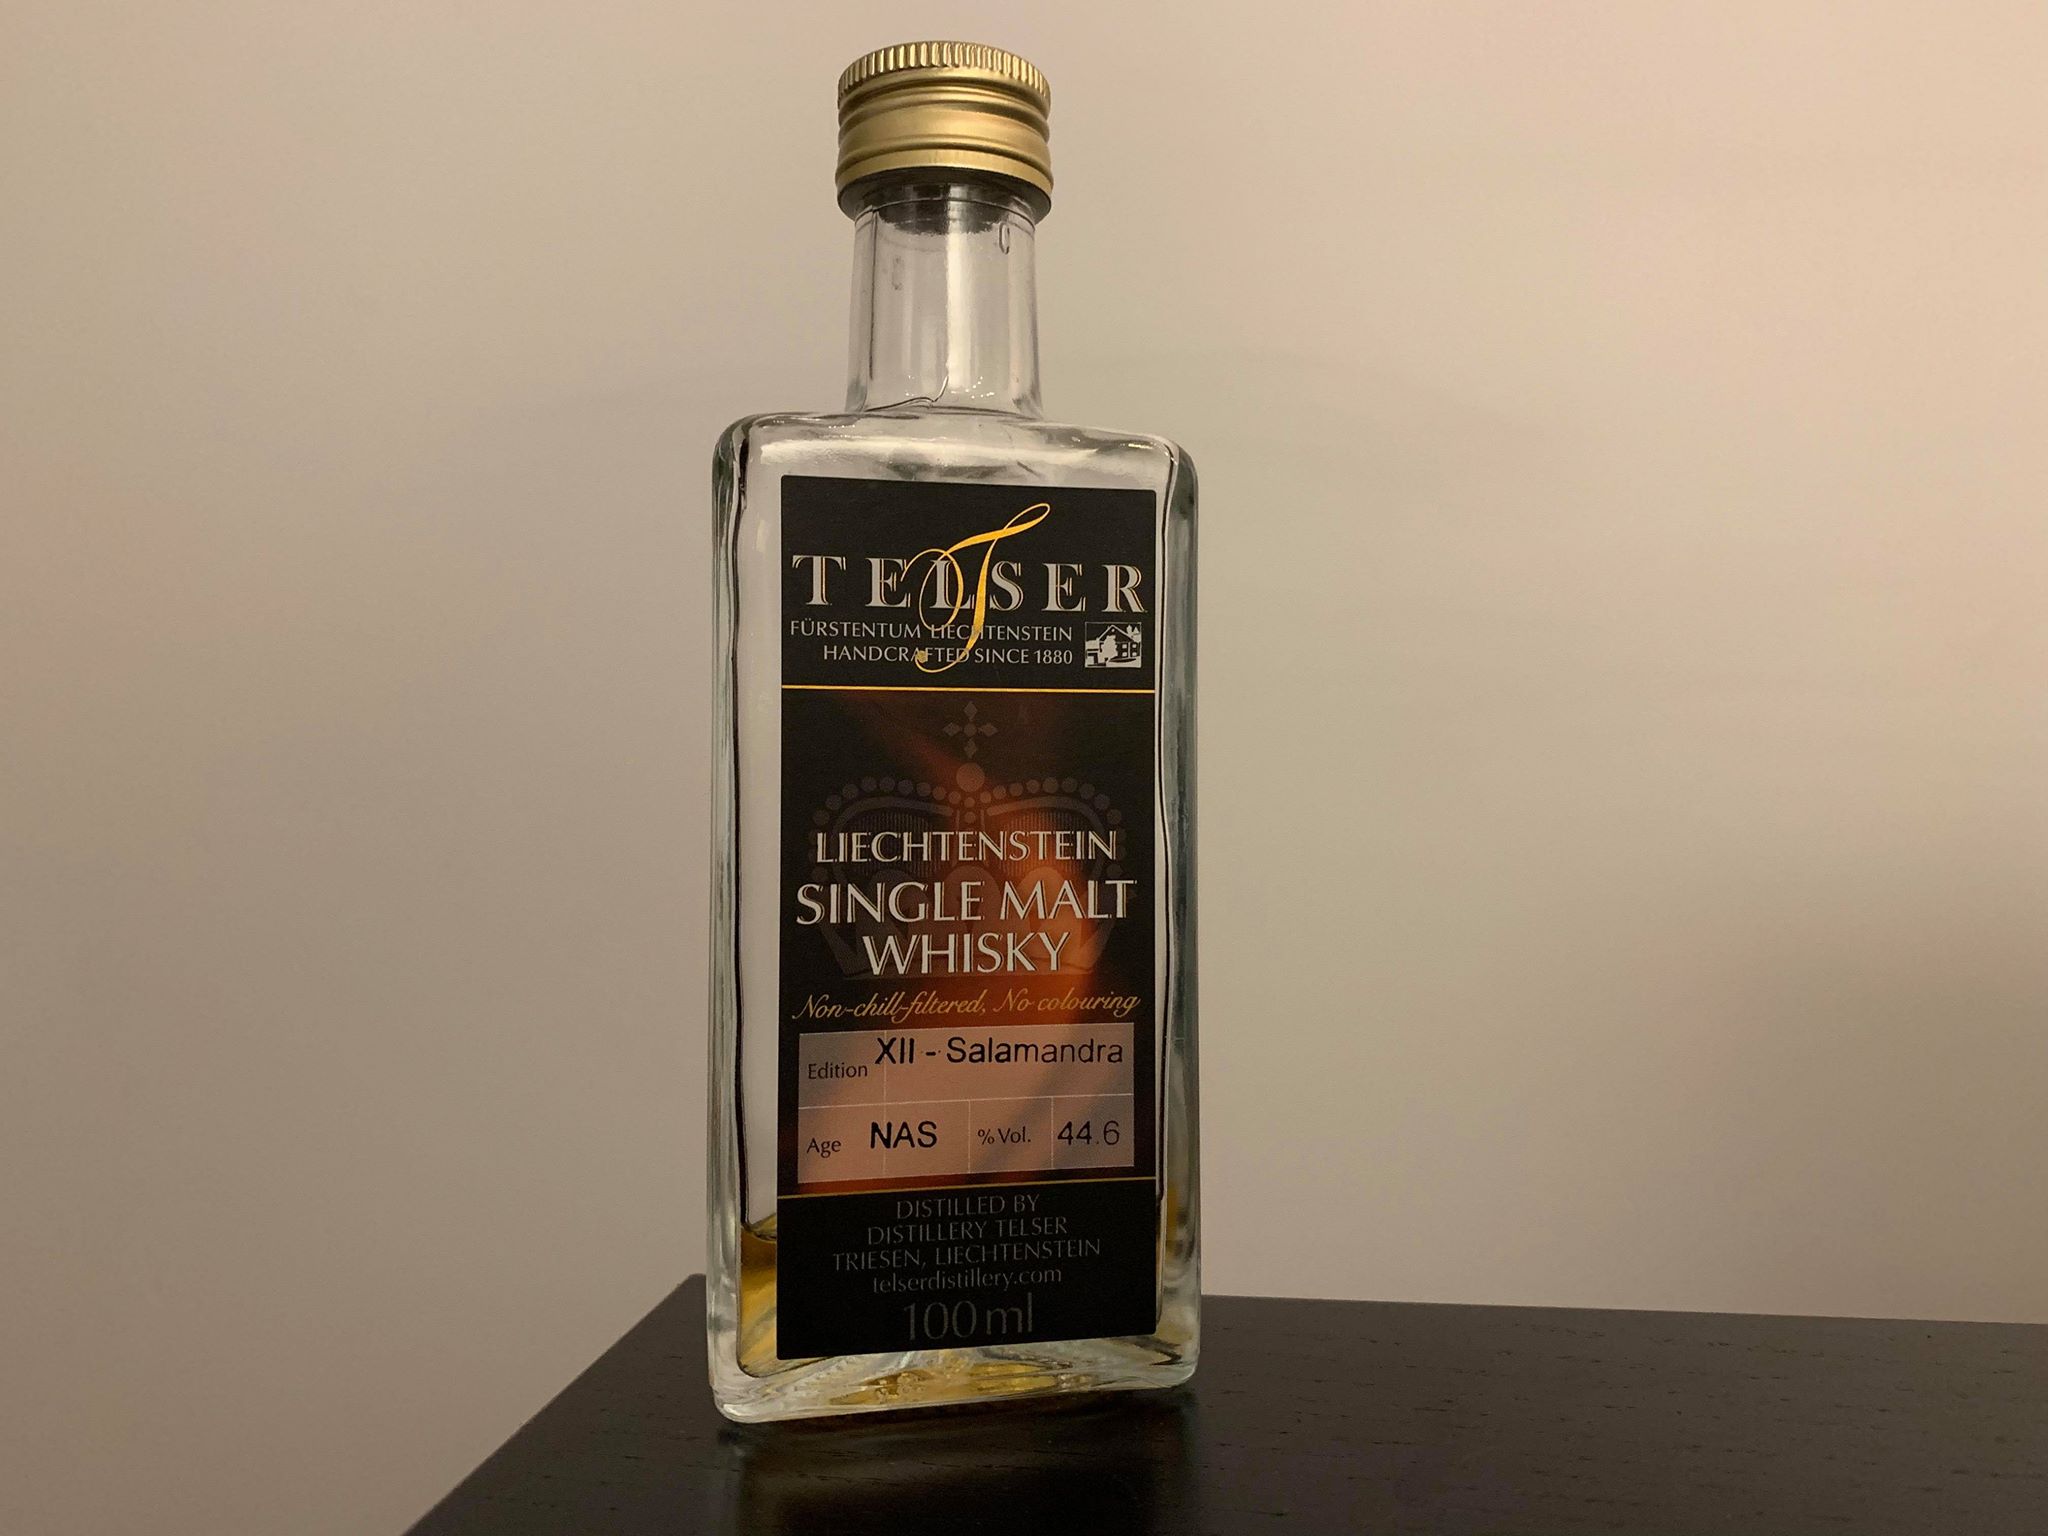 En vidrig whisky från Liechtenstein